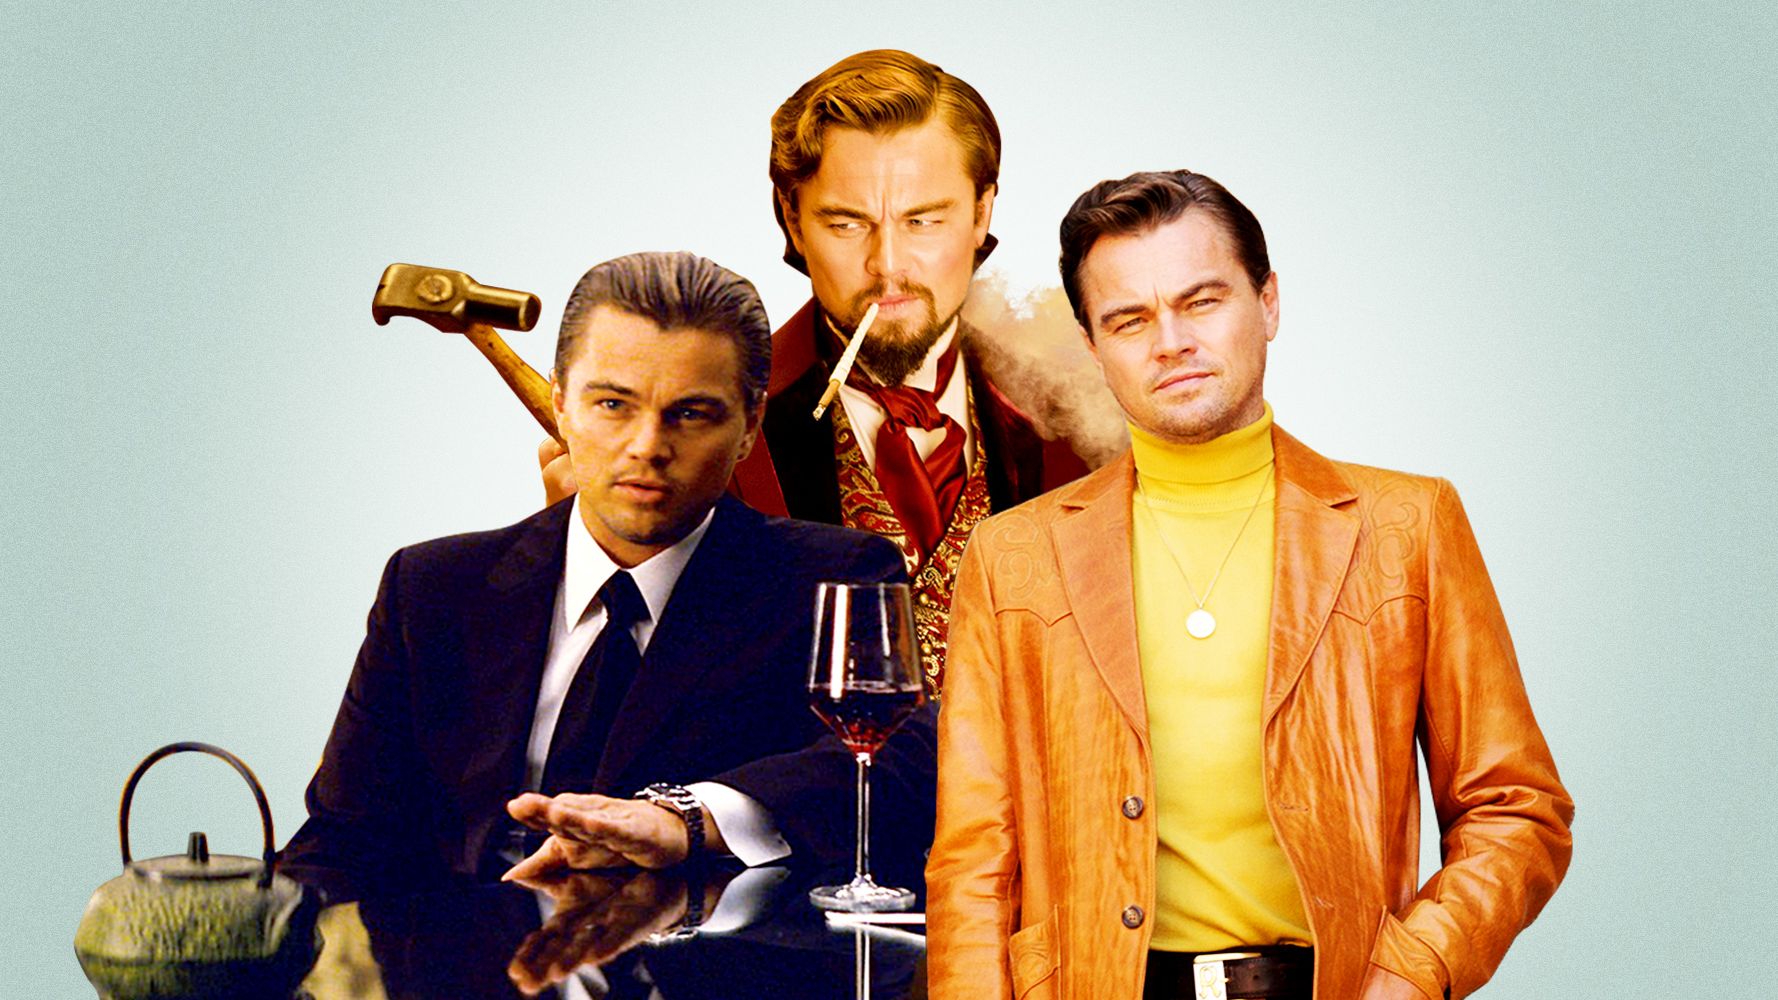 30 Best Leonardo DiCaprio Movies, Ranked - Greatest Leonardo DiCaprio Films  to Watch